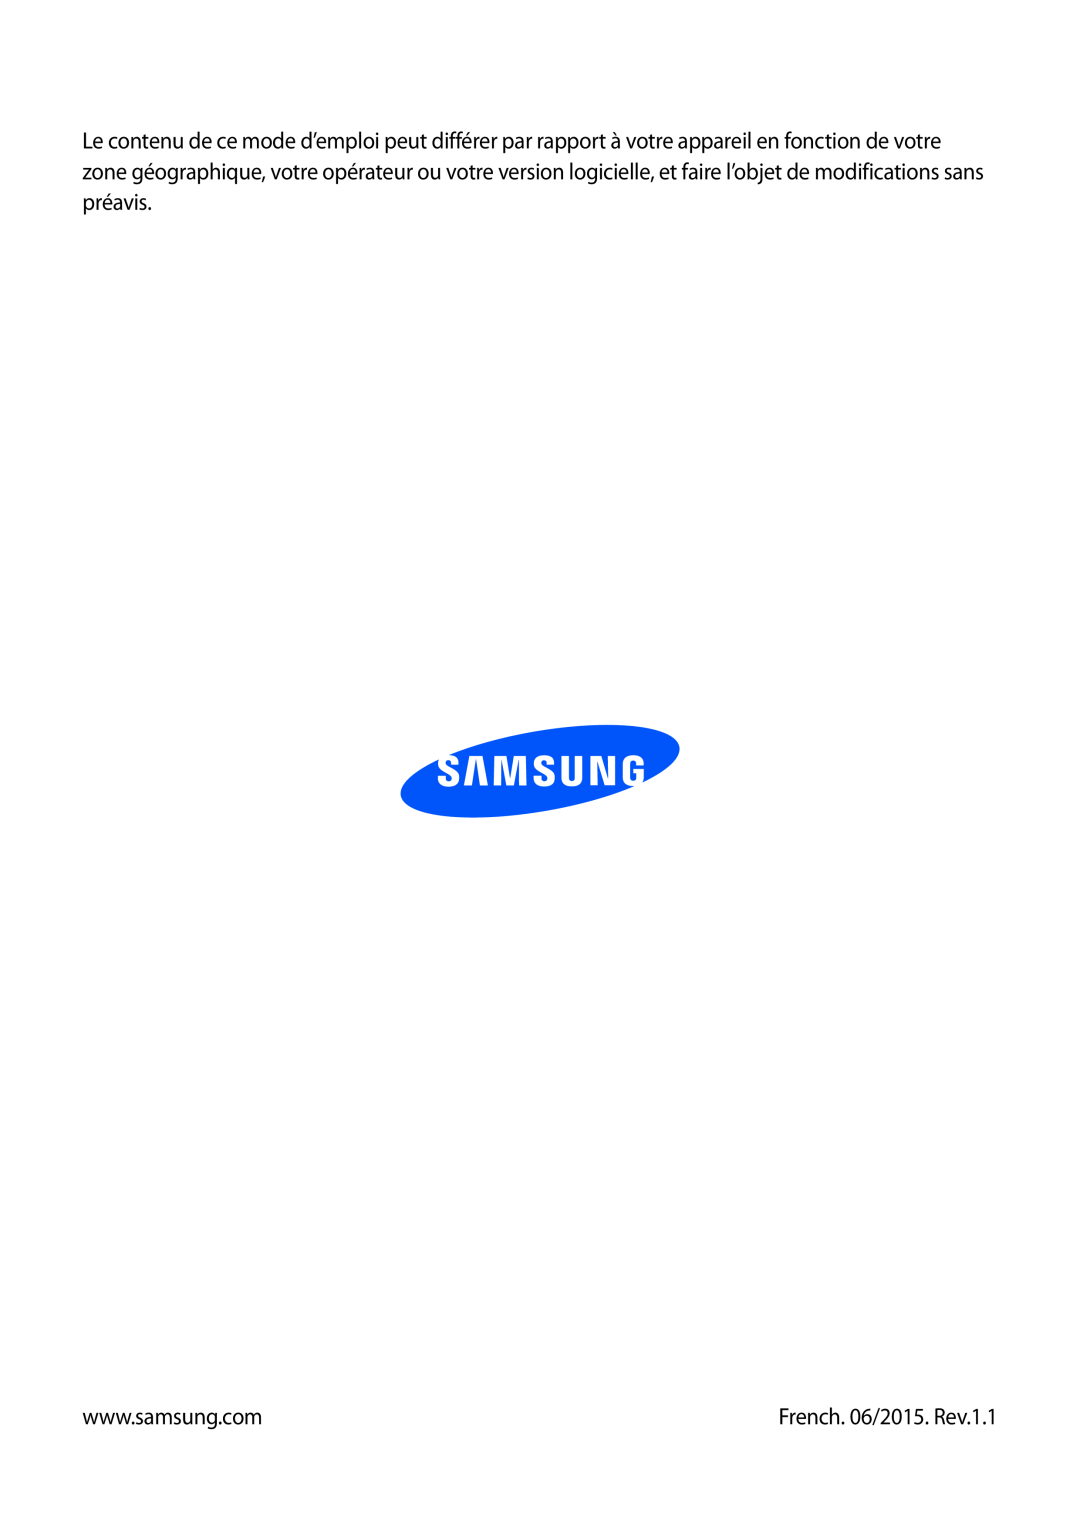 Samsung SM-T320NZKAXEF, SM-T320XZWAXEF, SM-T320NZWAXEF manual French. 06/2015. Rev.1.1 